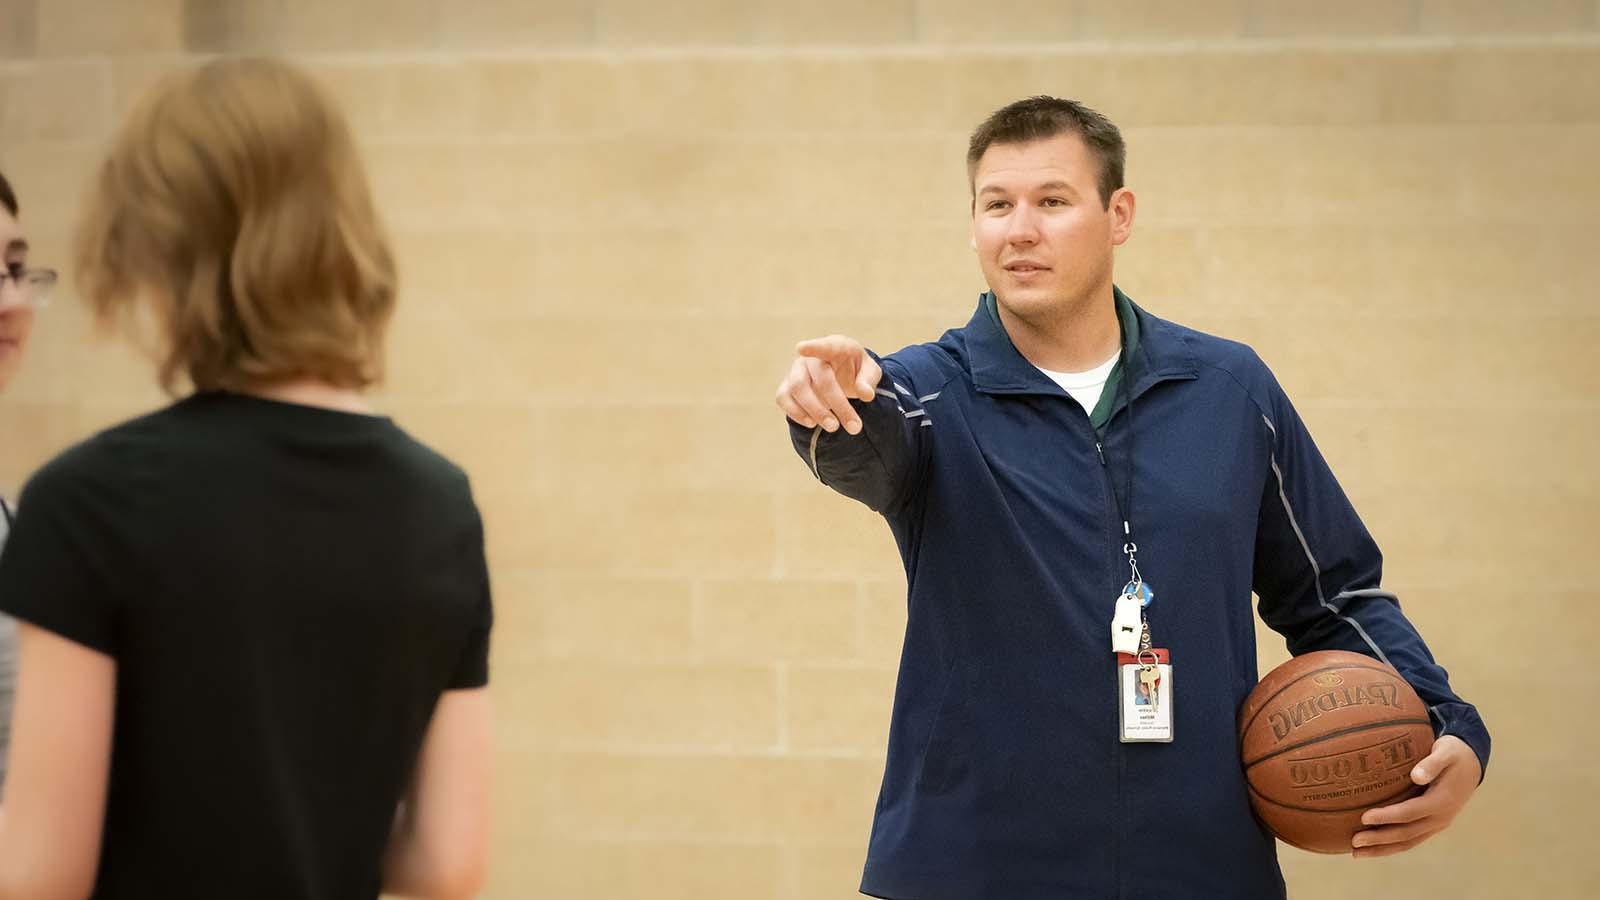 Physical education teacher teaching basketball to high school students